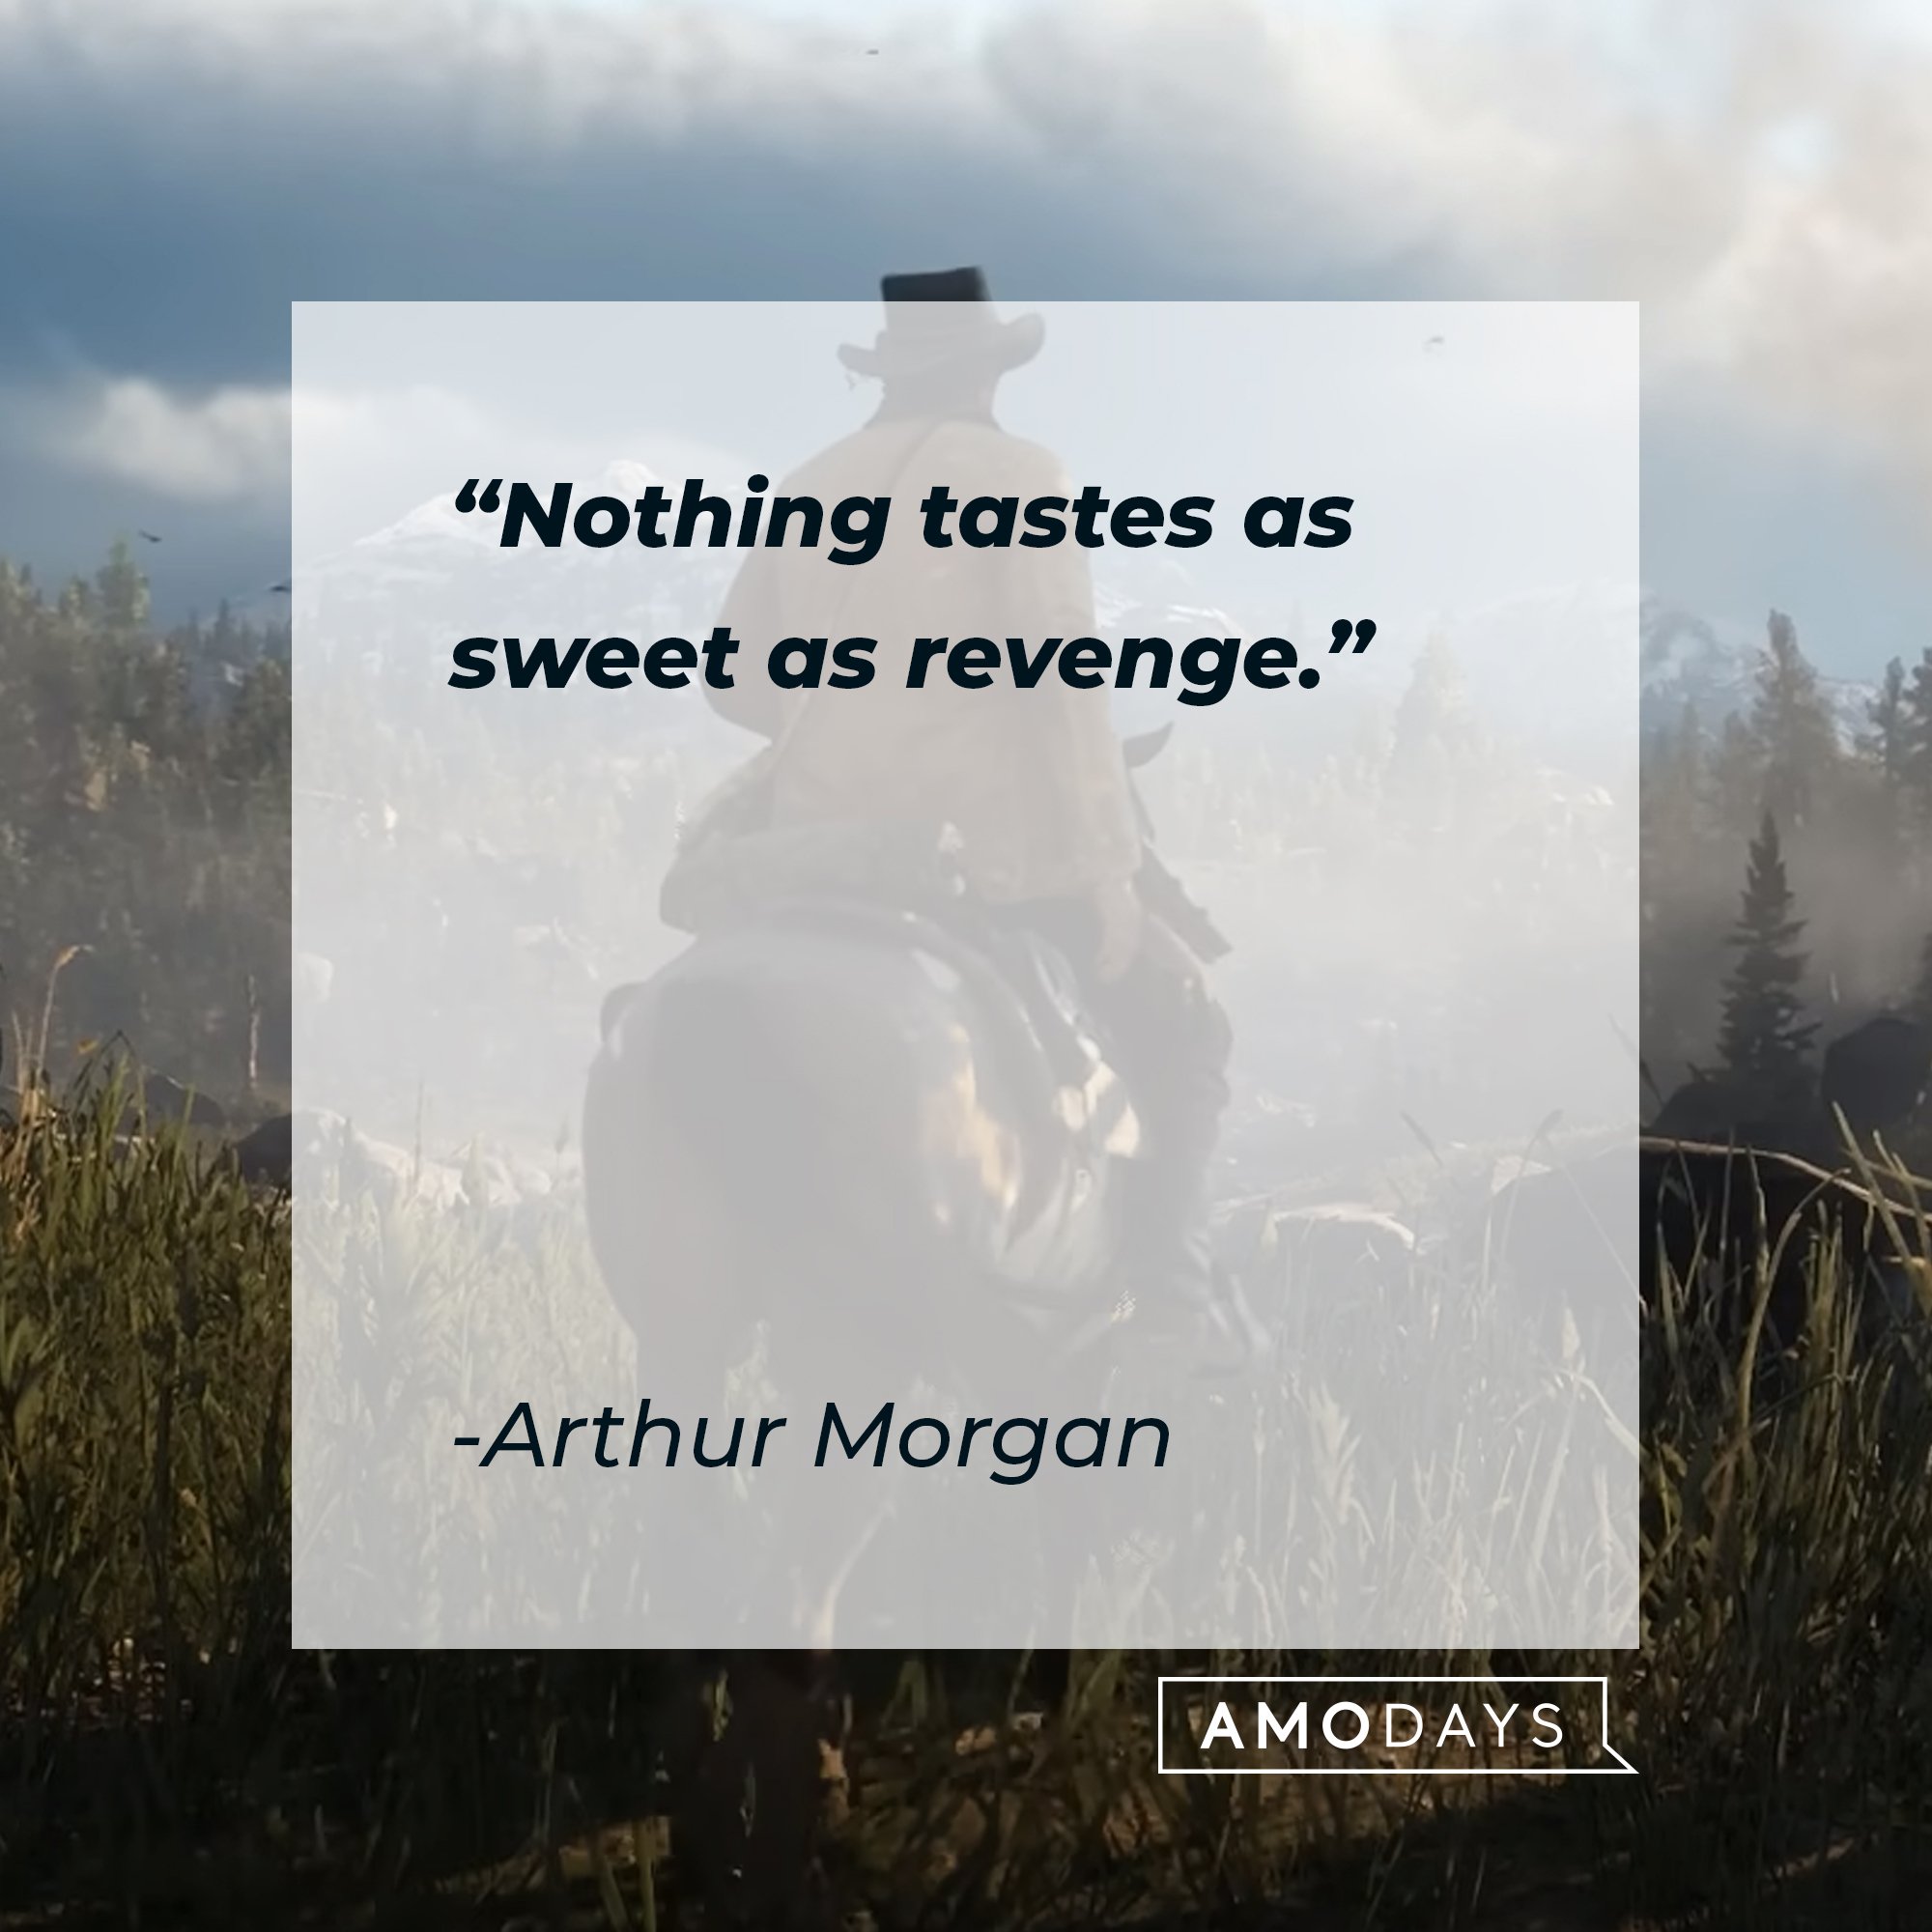 Arthur Morgan's quote: "Nothing tastes as sweet as revenge." | Image: AmoDays